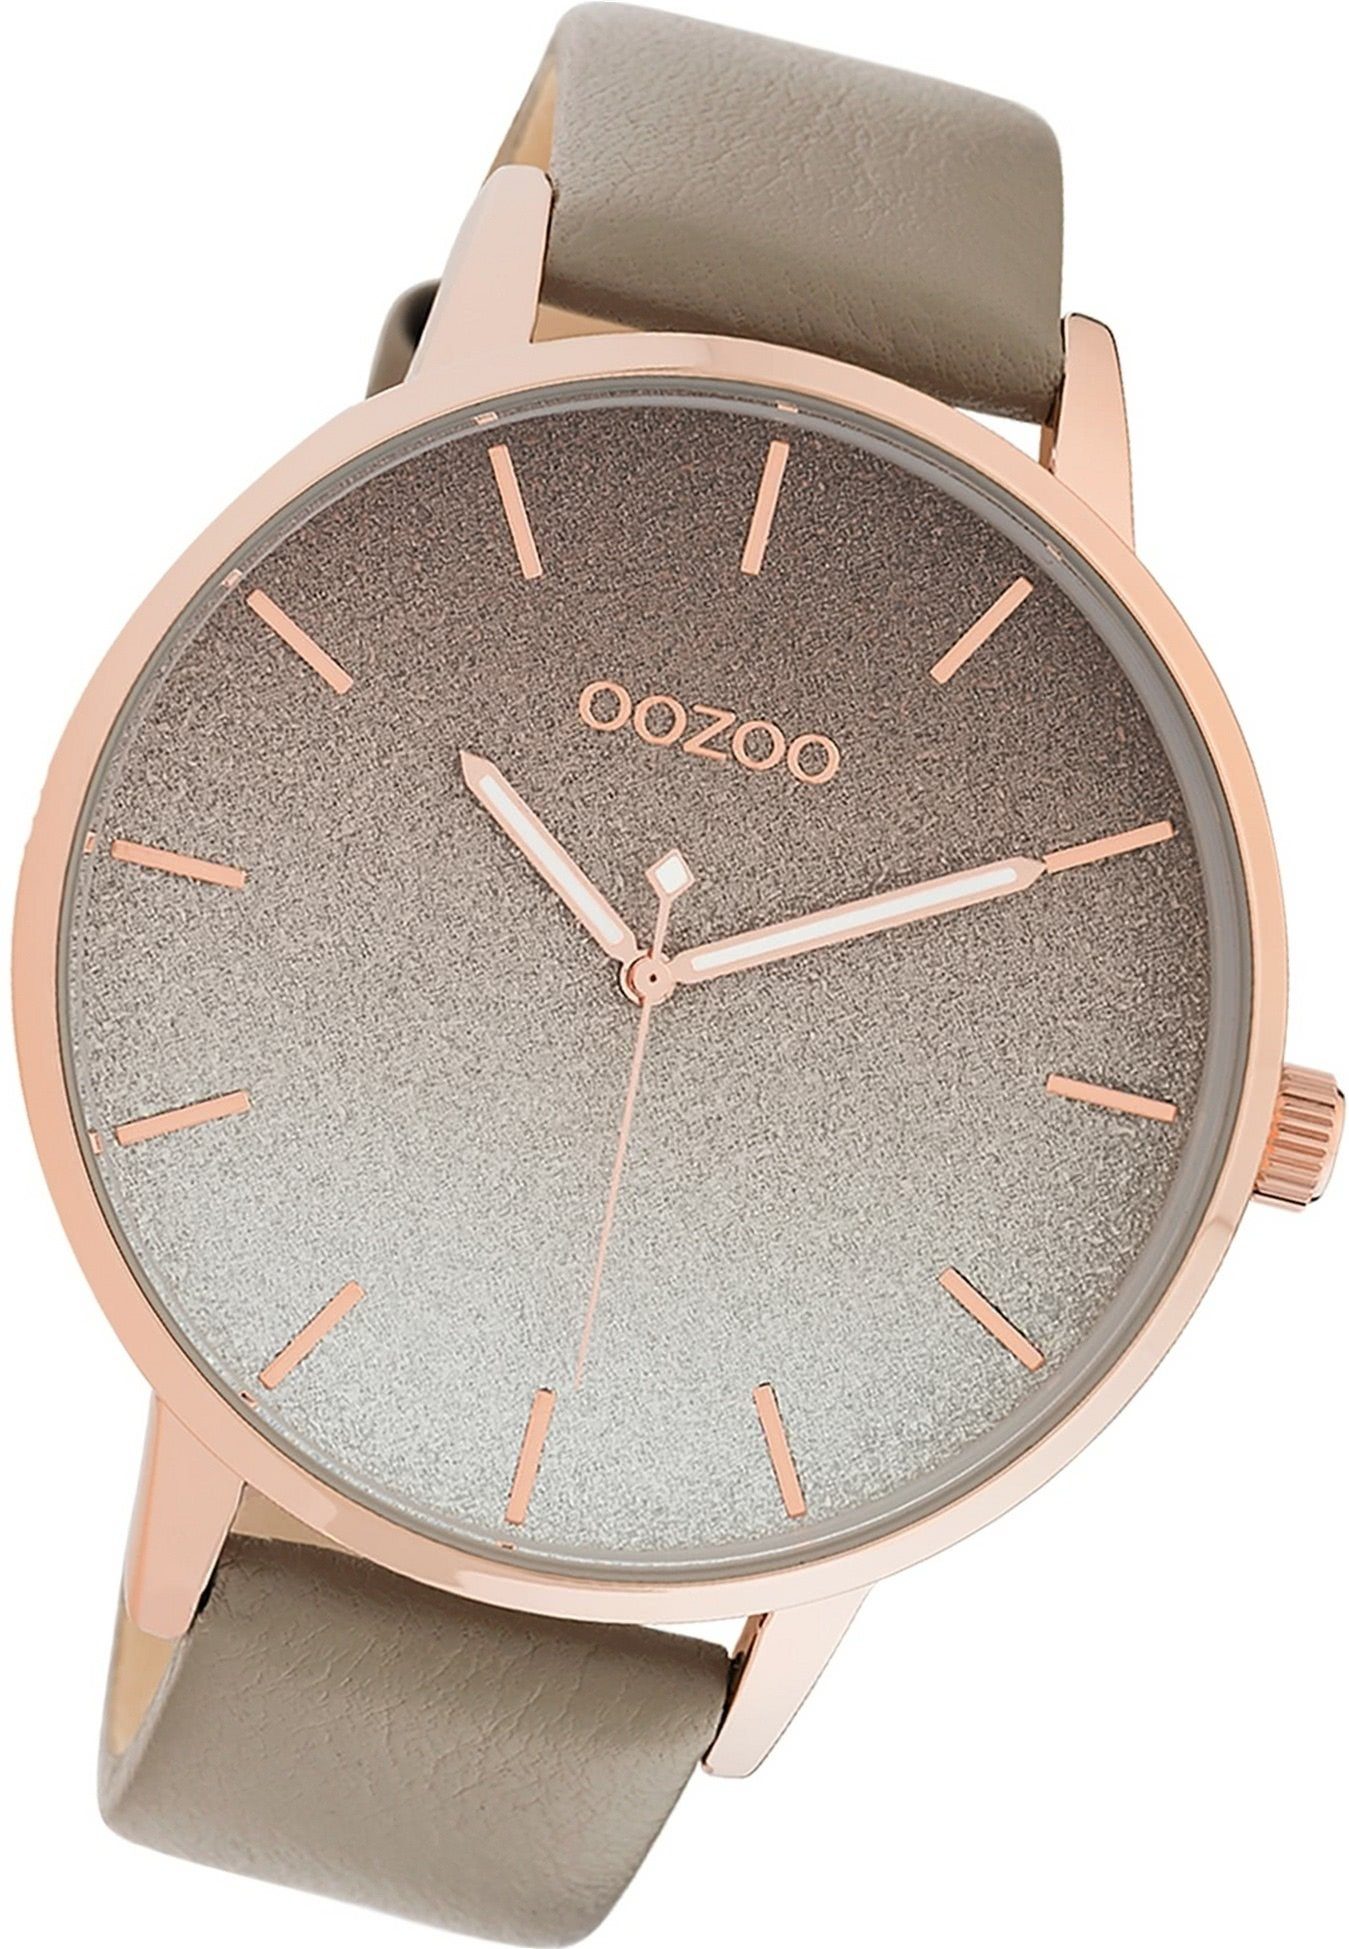 Gehäuse, Damenuhr groß extra rundes Oozoo Armbanduhr (ca. Timepieces, Damen Lederarmband 48mm) OOZOO braun, Quarzuhr